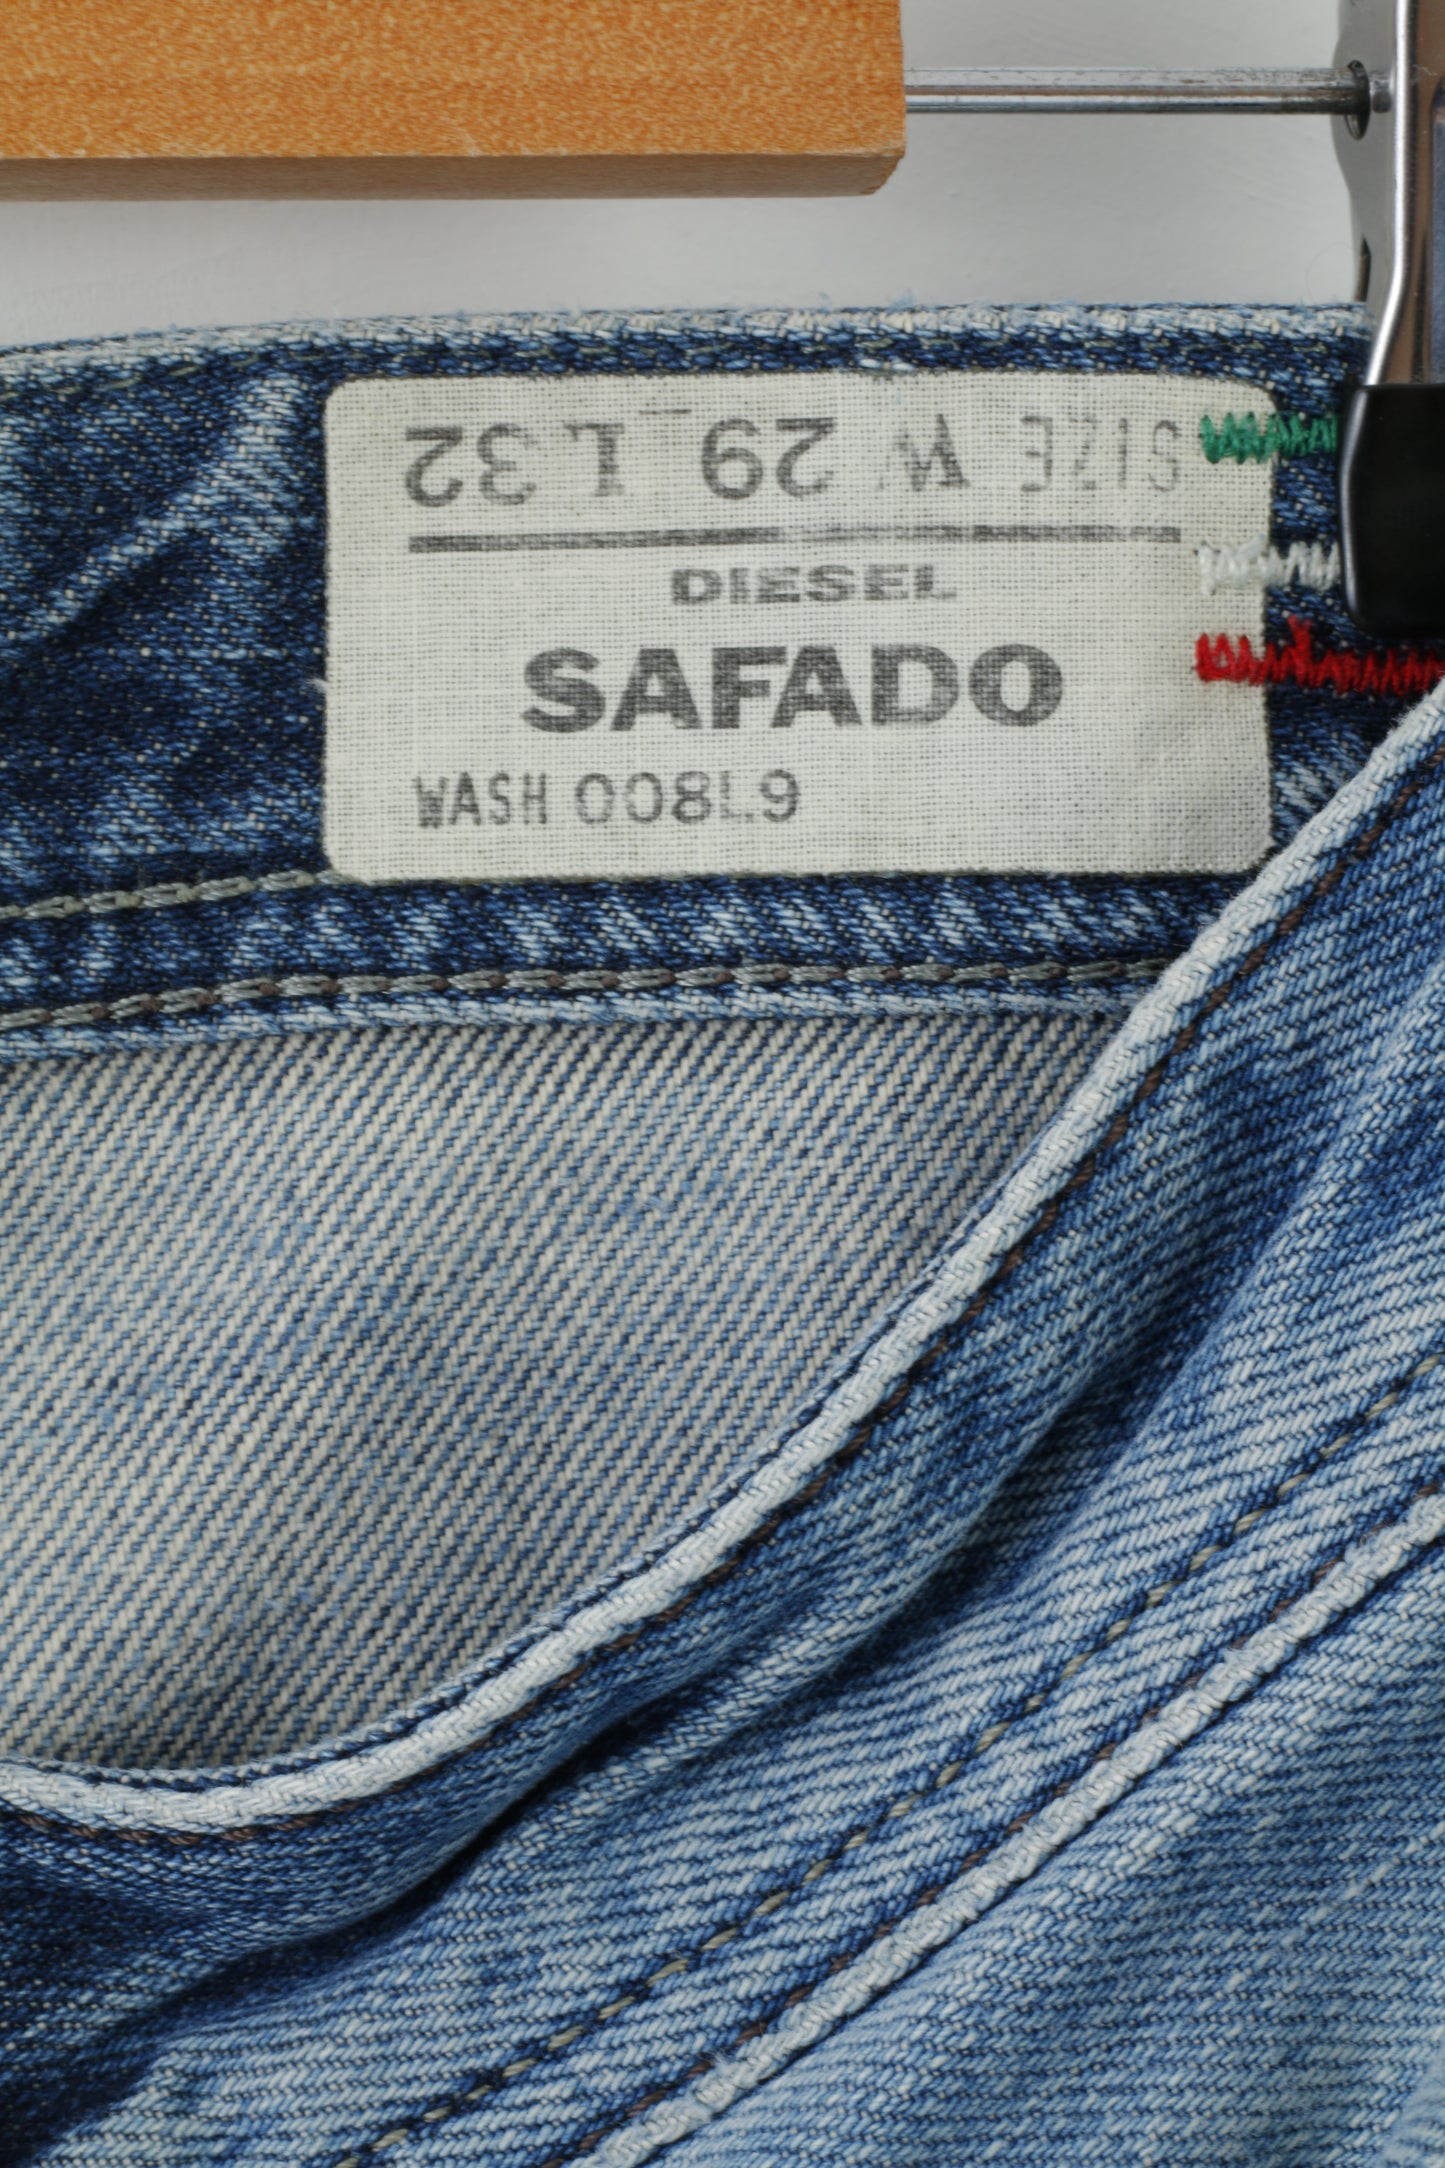 Diesel Safado Mens W29 L32 Jeans NavyCotton Worn Out Italy Denim Design